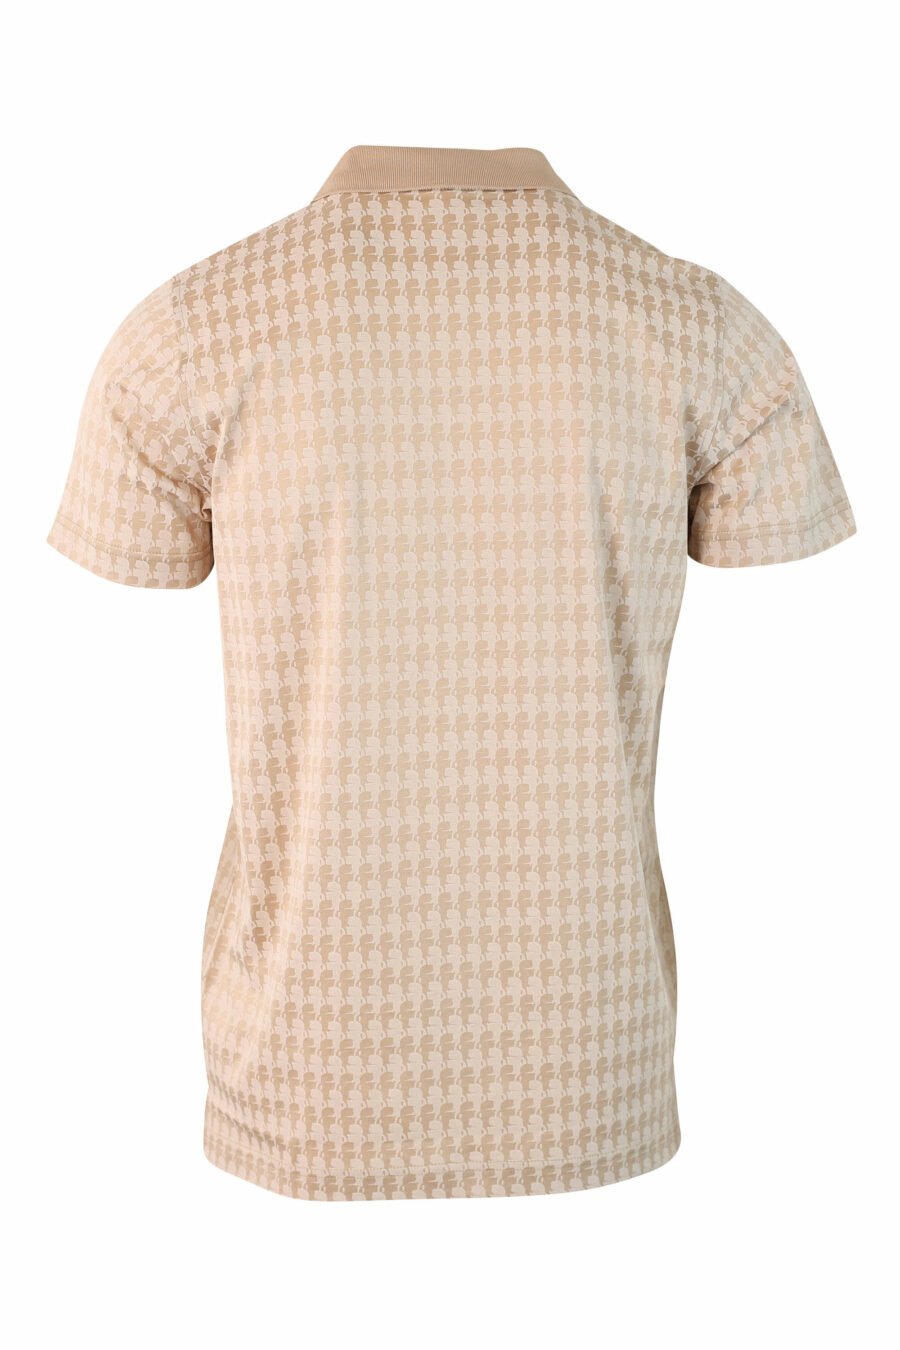 Beige polo shirt "all over logo" monochrome - IMG 9832 1